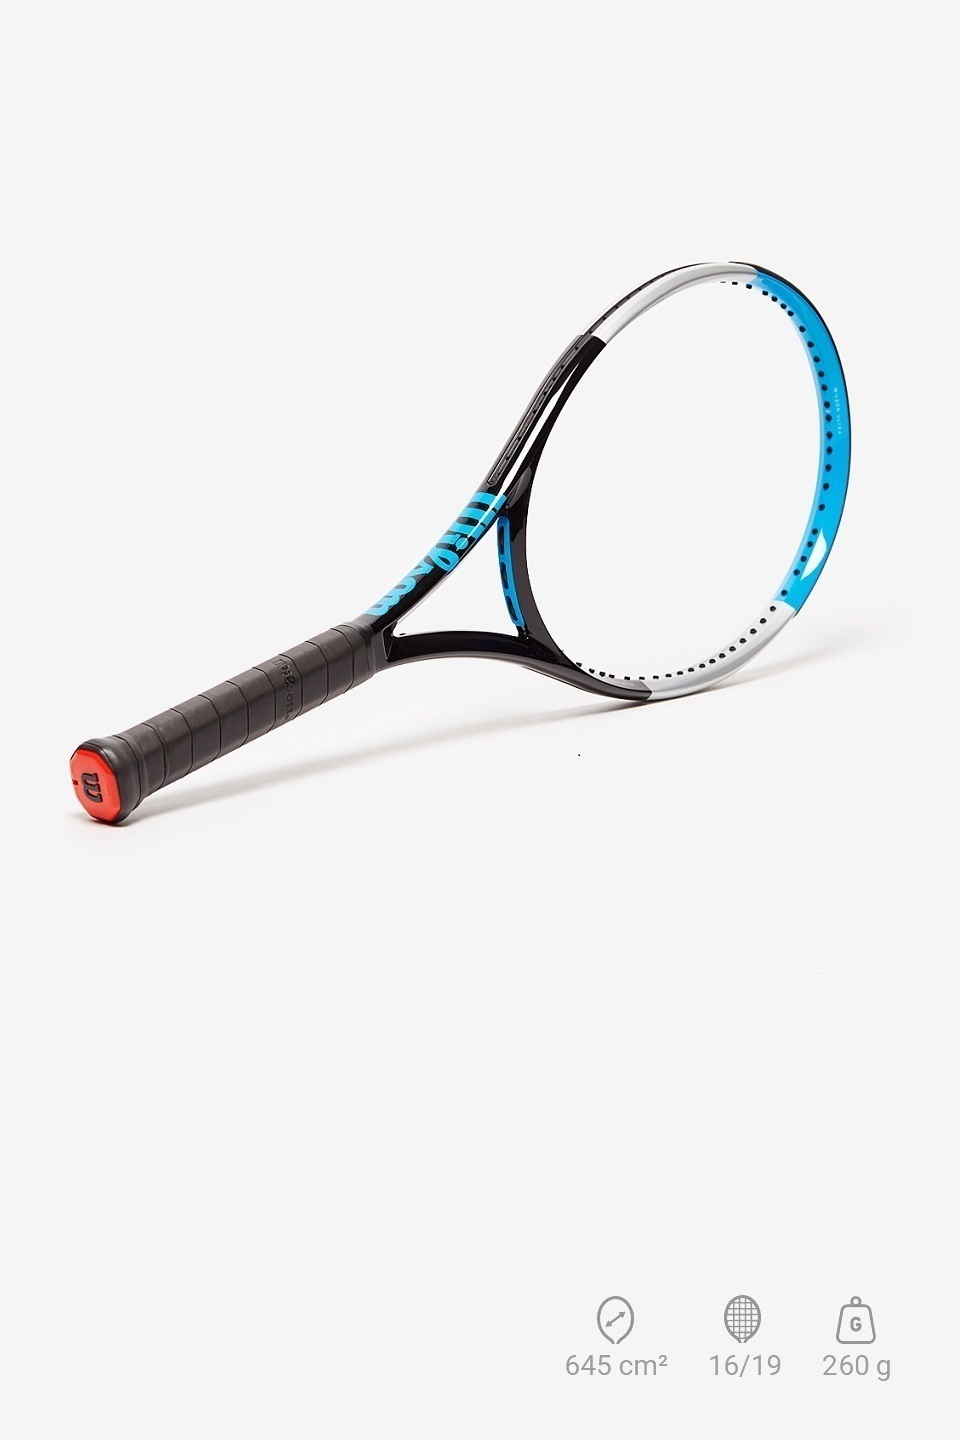 WİLSON - Wilson Ultra 100UL V3.0 Tenis Raketi